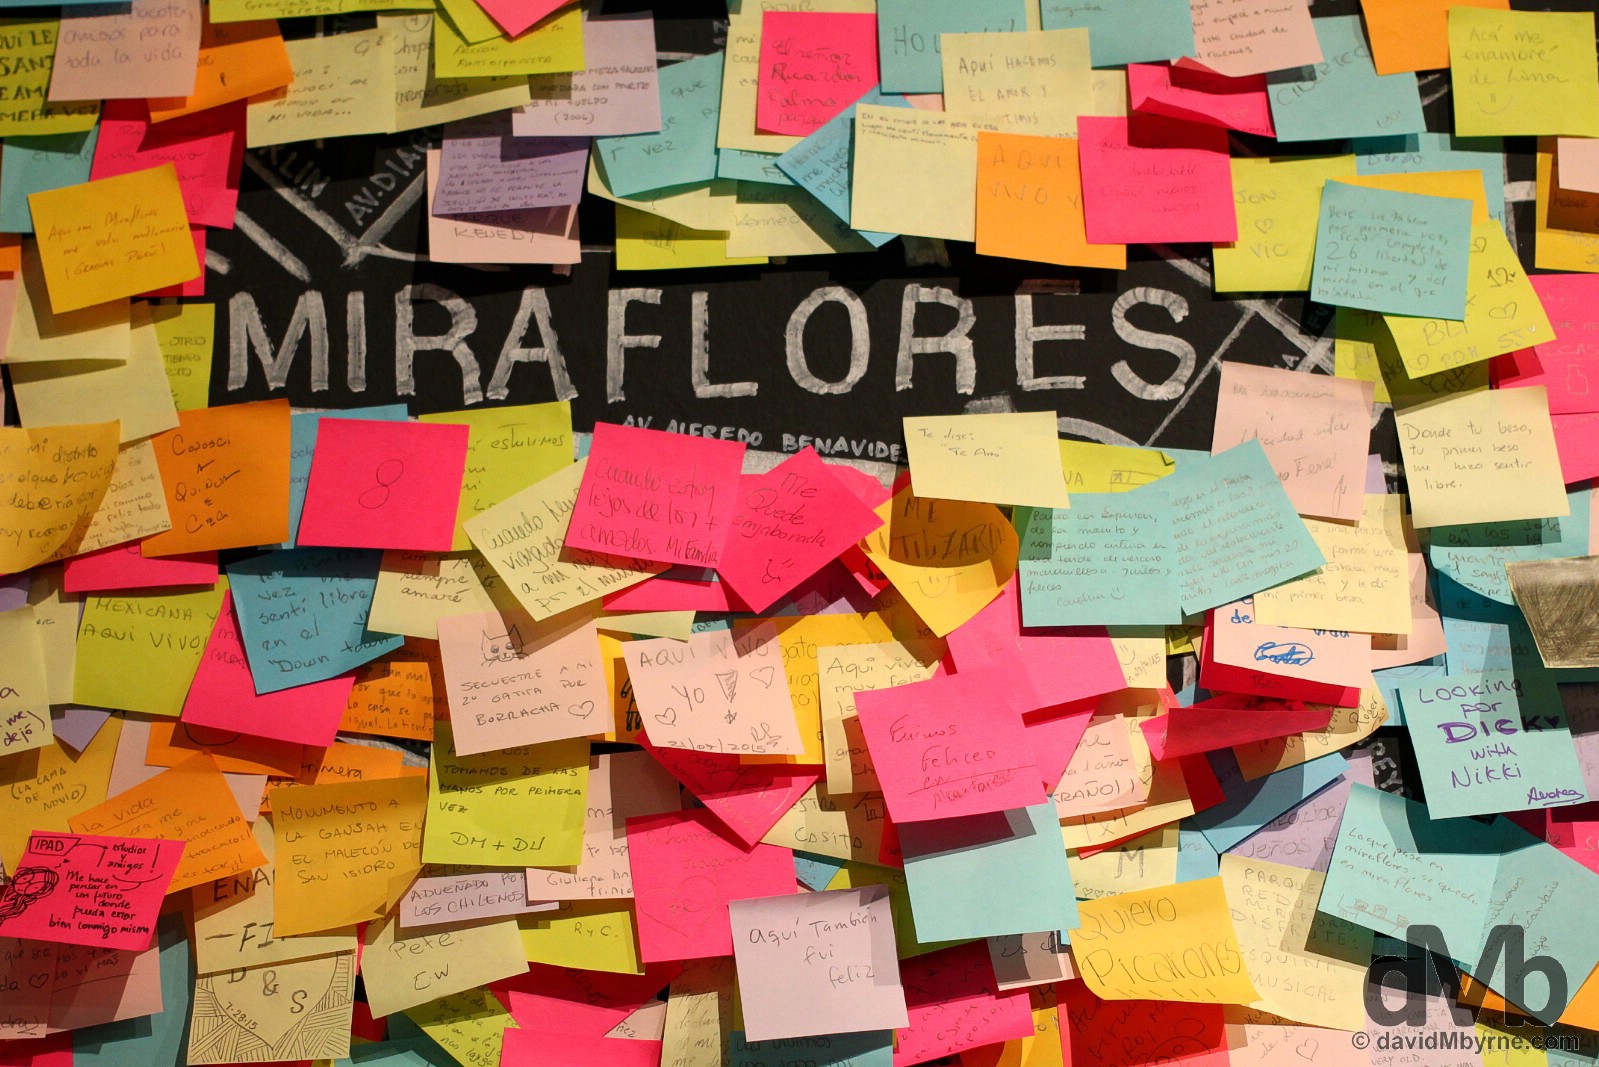 Post-it notes in an exhibition in the Centro Cultural de la Municipalidad de Miaflores, Miraflores, Lima, Peru. August 8, 2015. 